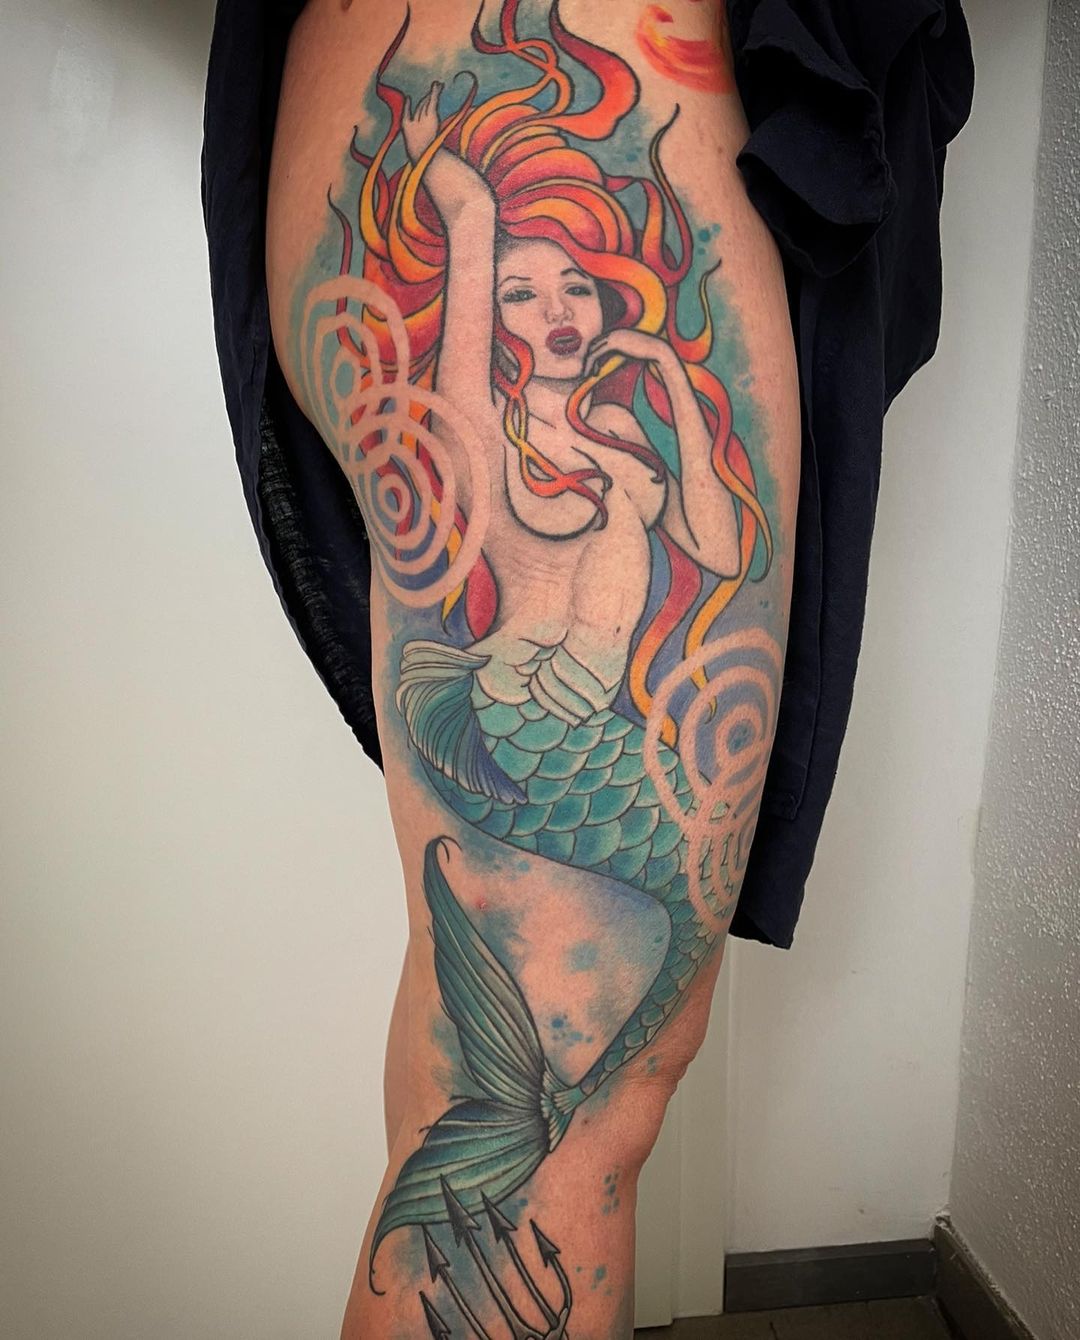 Meerjungfrau (verheilt)
•
•
•
#inked #ink#inkedgirls #tattoo #tattoos #tattoed #